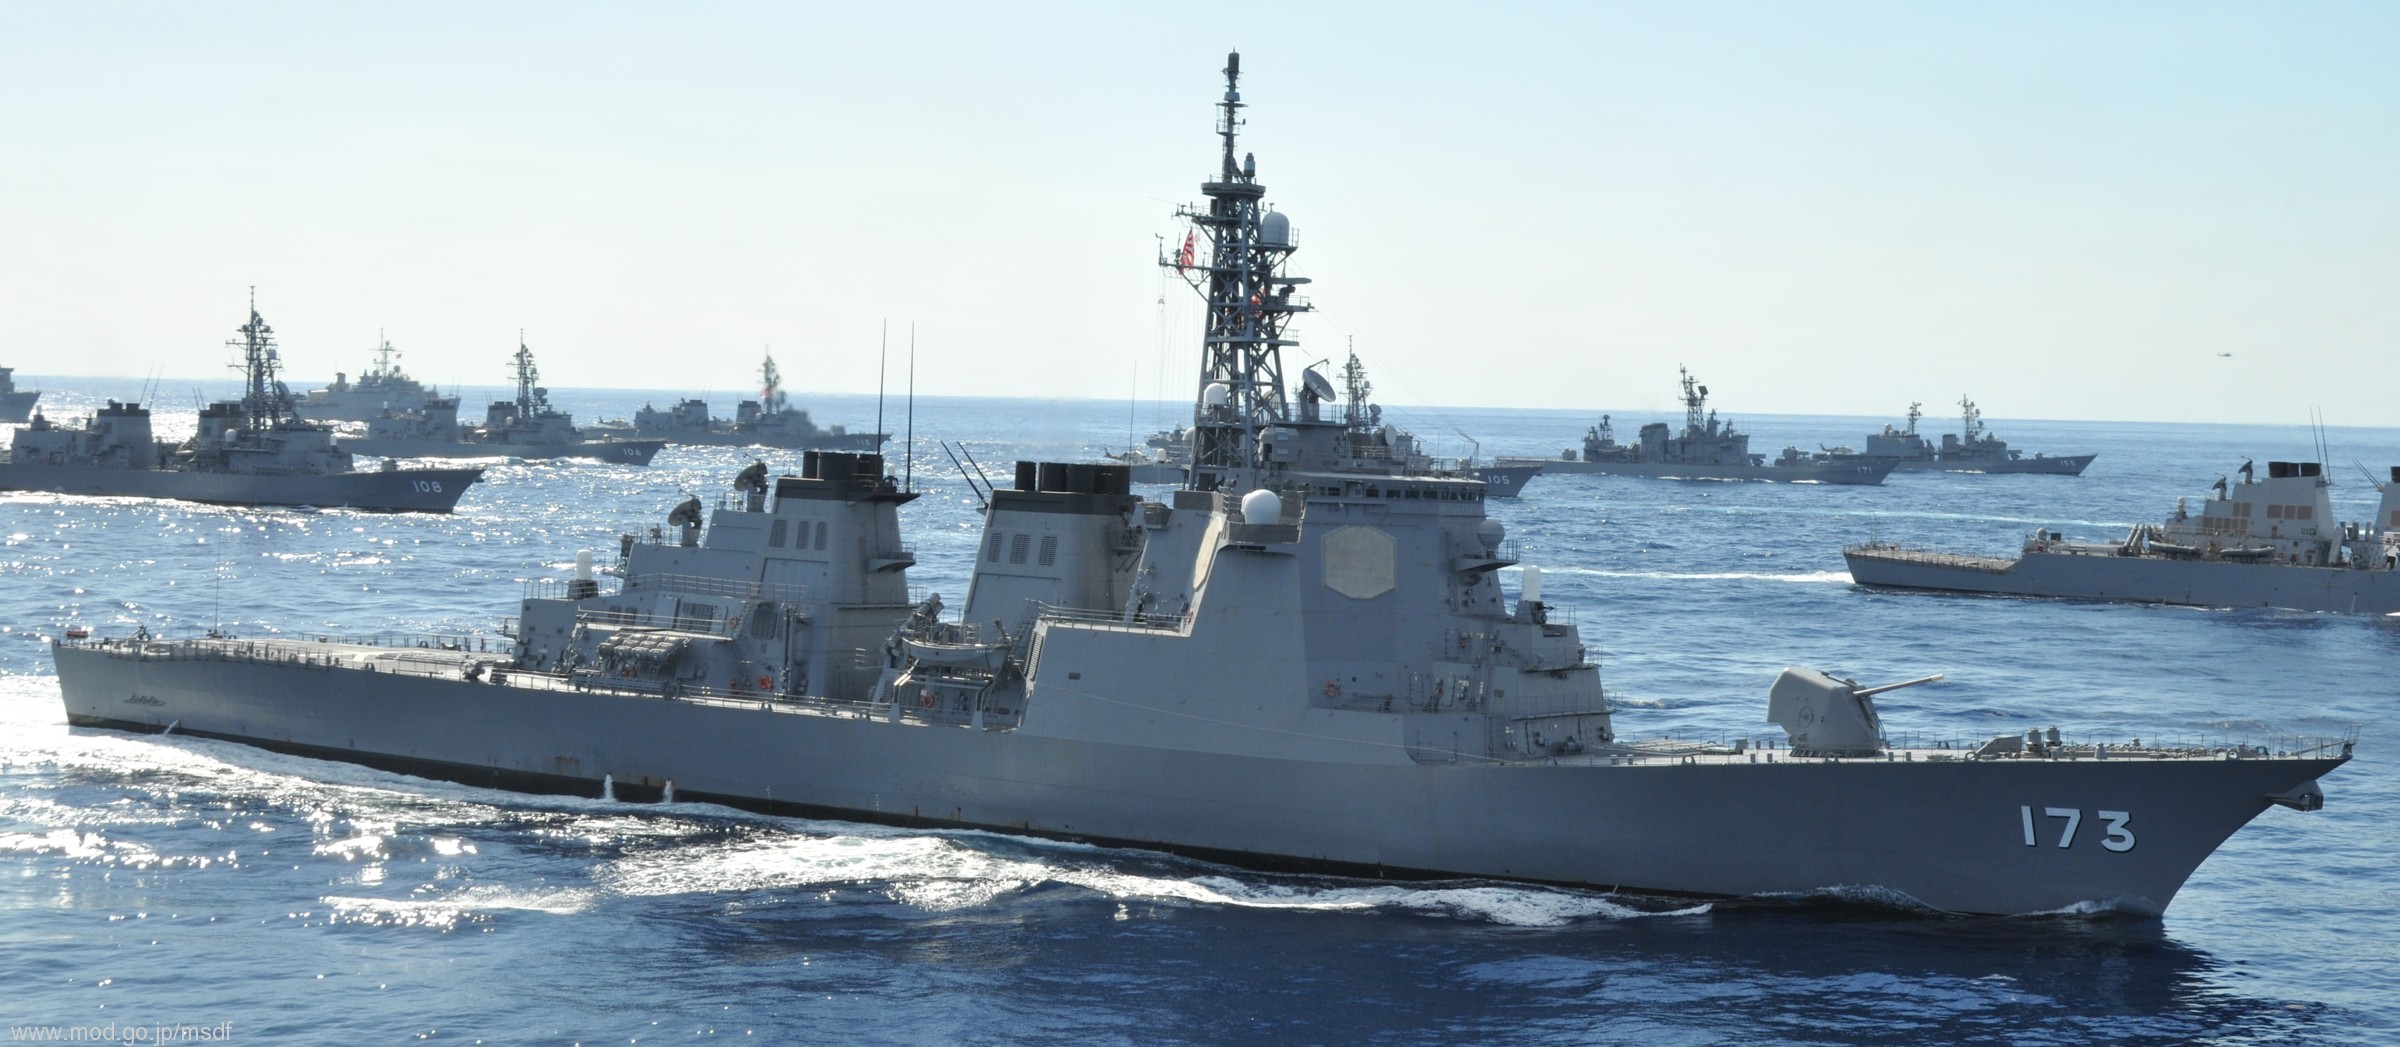 ddg-173 js kongo class guided missile destroyer aegis japan maritime self defense force jmsdf 04